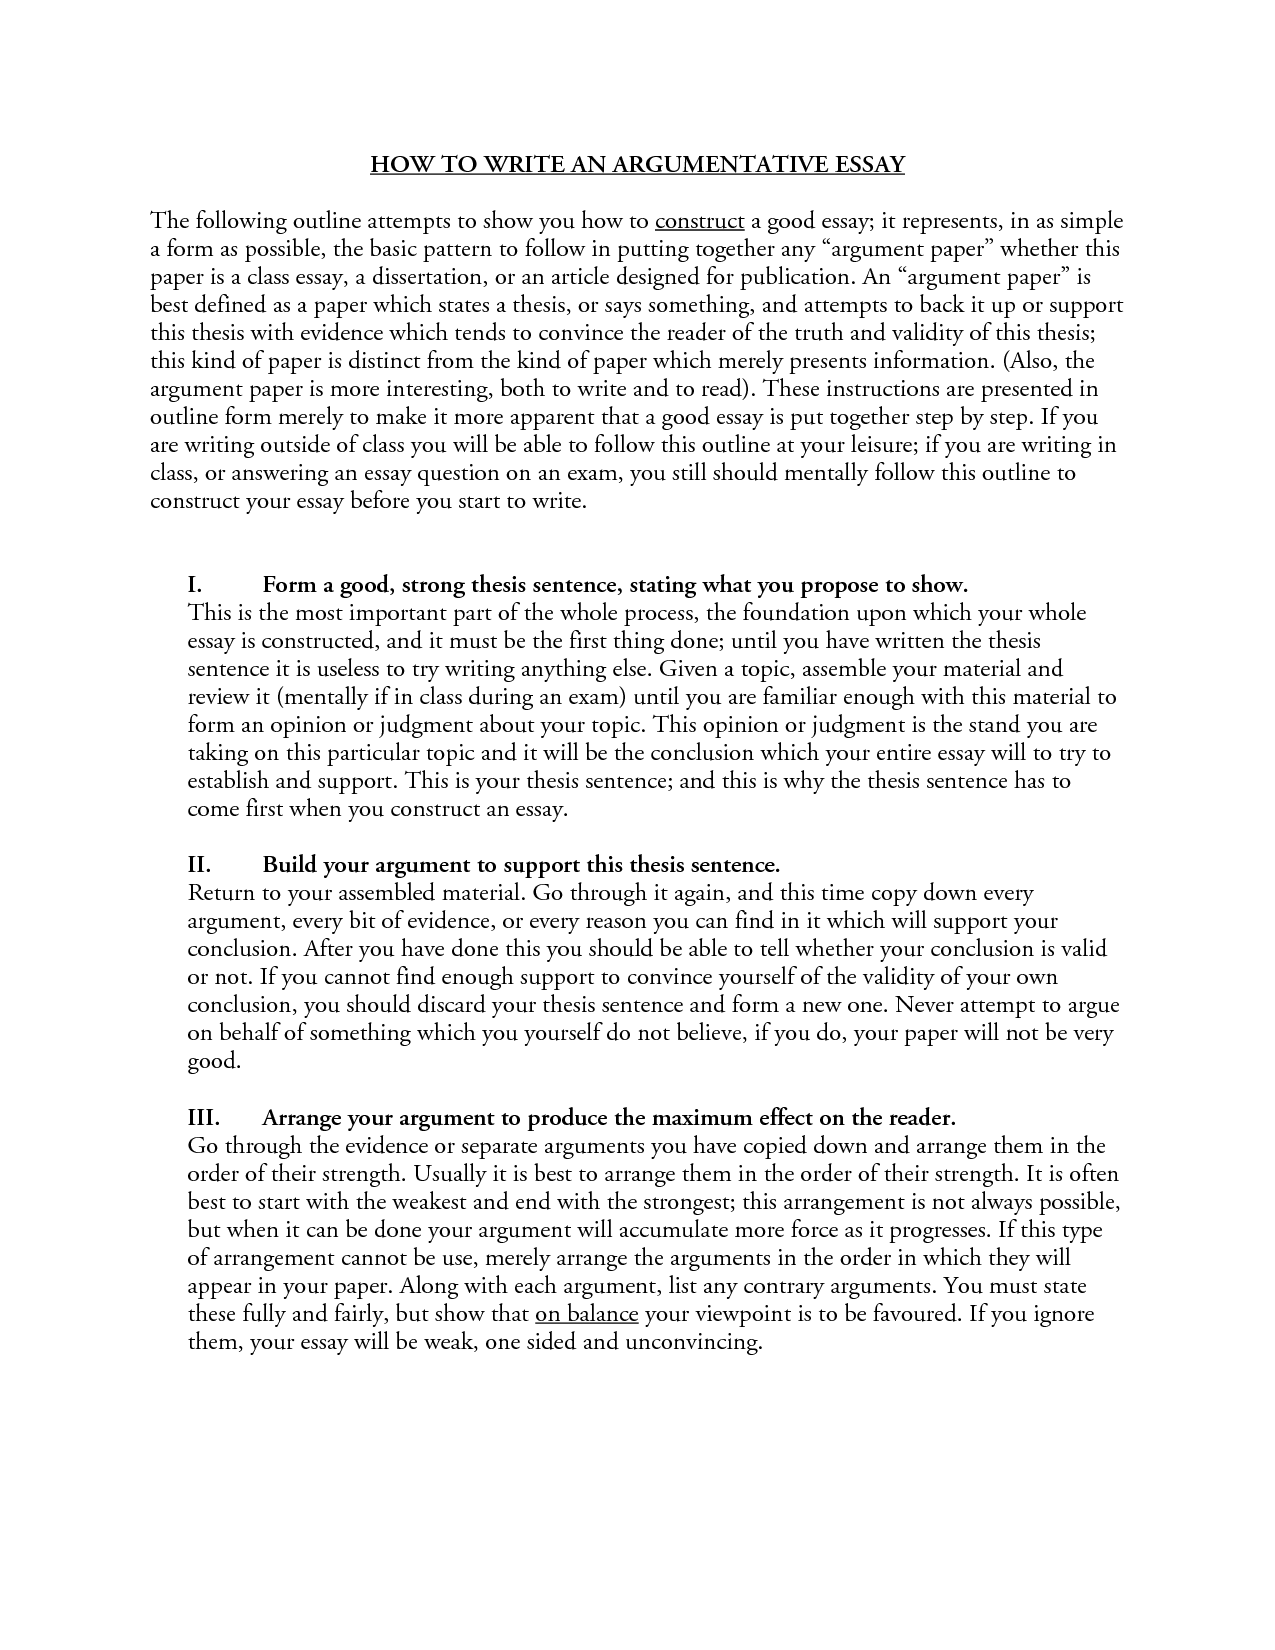 Sample introduction paragraph for argumentative essay